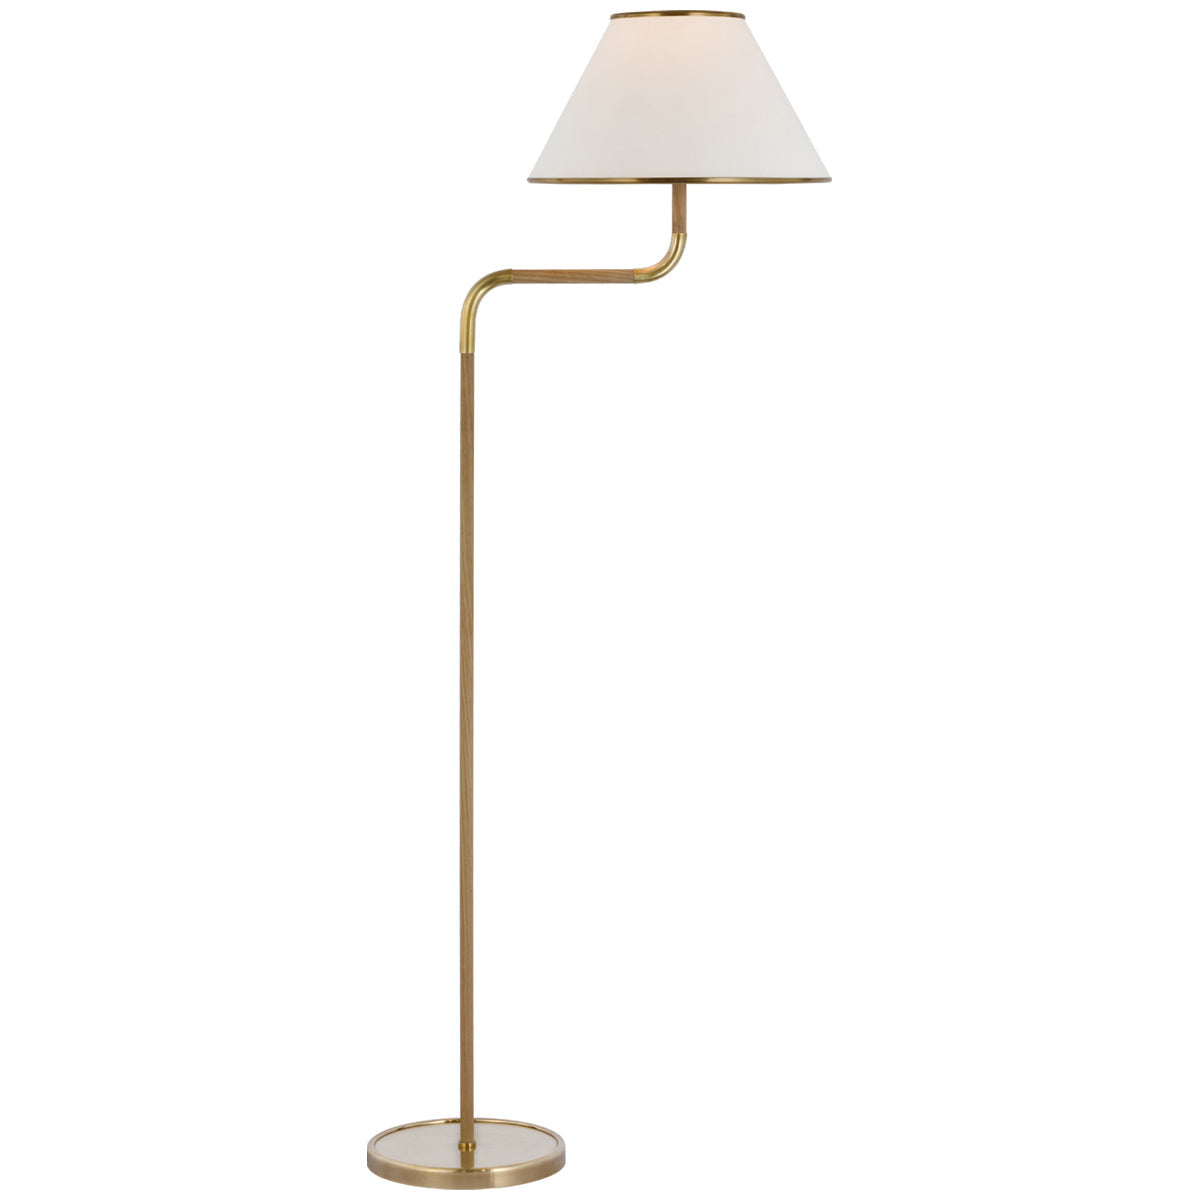 Visual Comfort Rigby Medium Bridge Arm Floor Lamp with Linen Shade